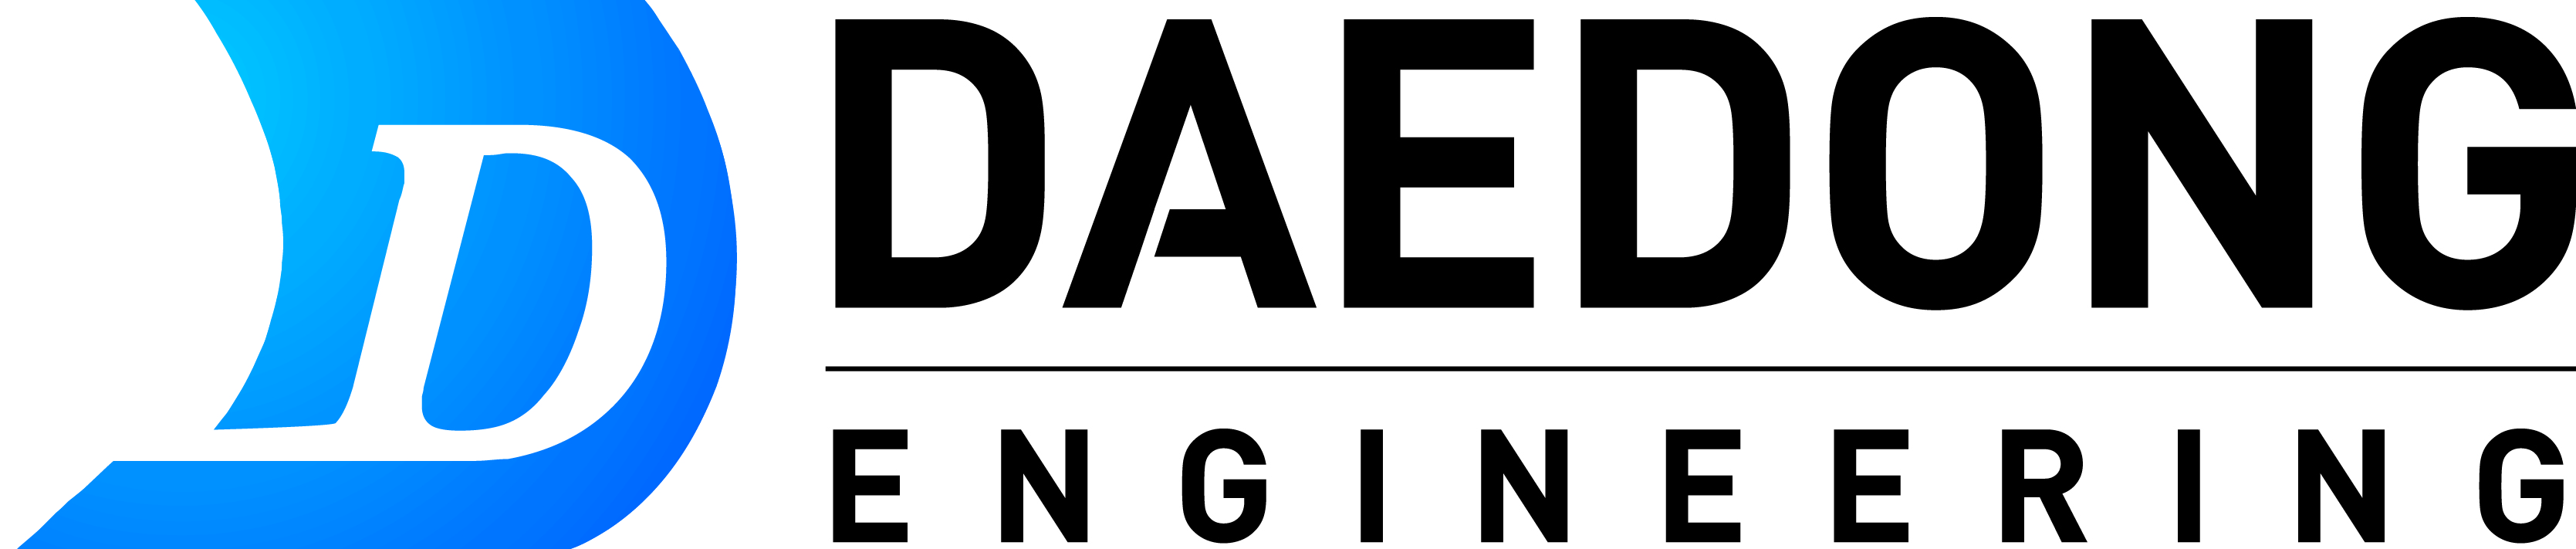 DAEDONG ENGINEERING CO., Ltd